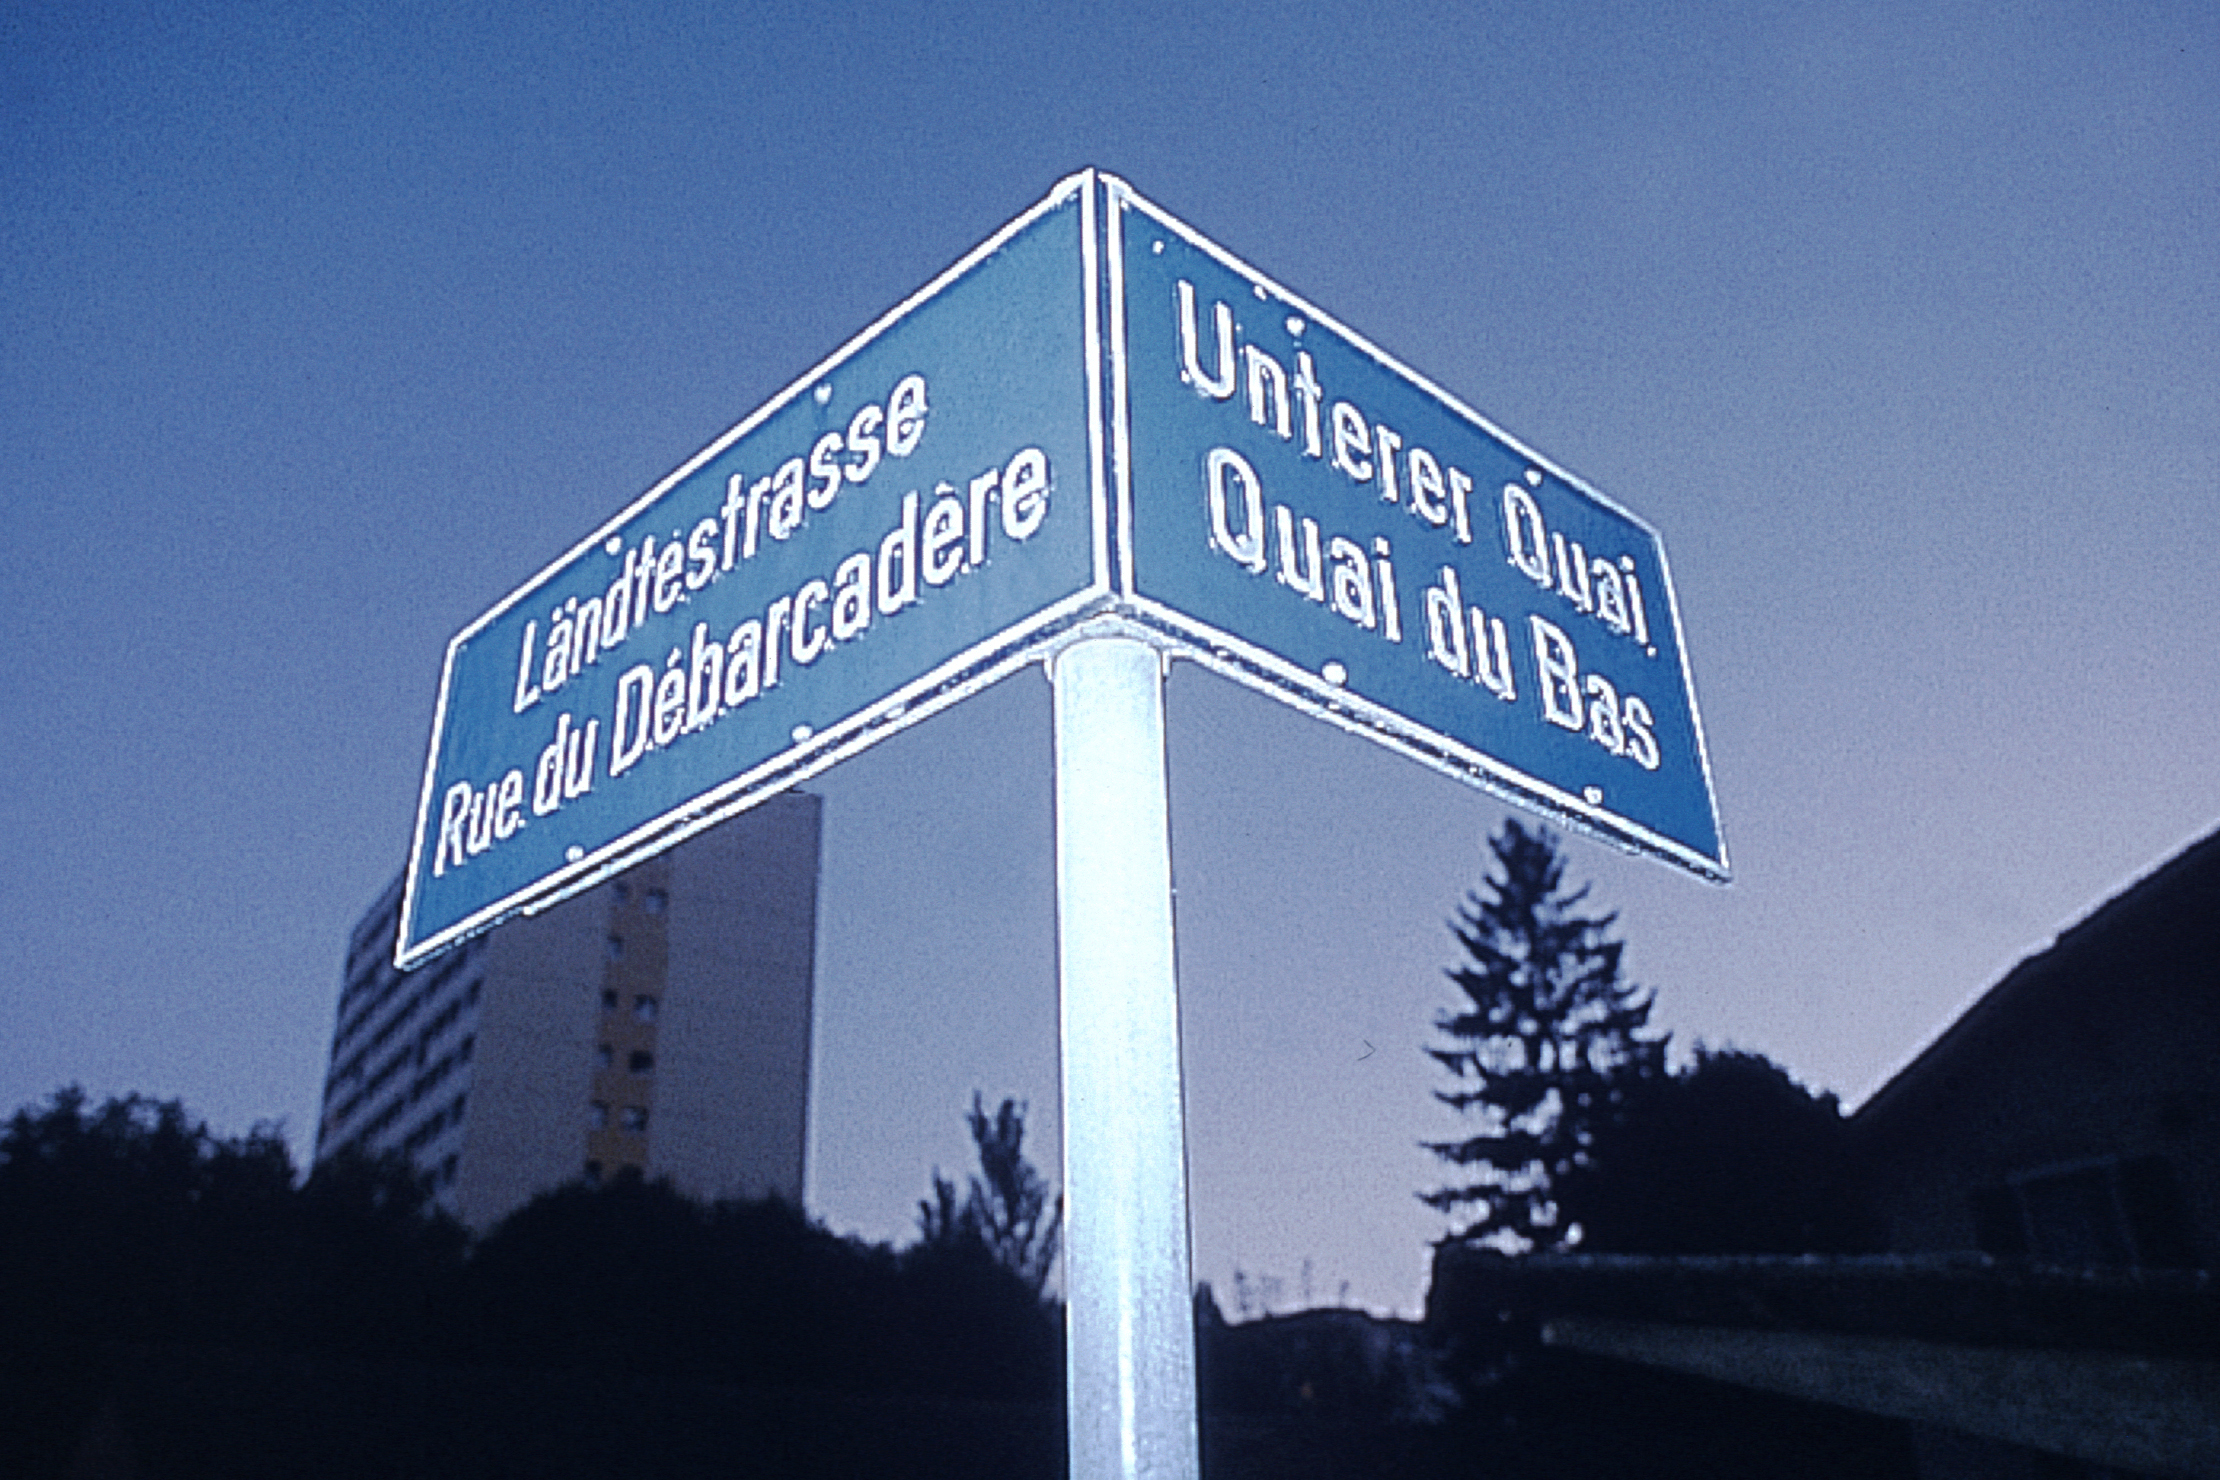 Bilinguismo – Biel/Bienne, la più grande città bilingue della Svizzera © Chambre économique Biel/Bienne Seeland